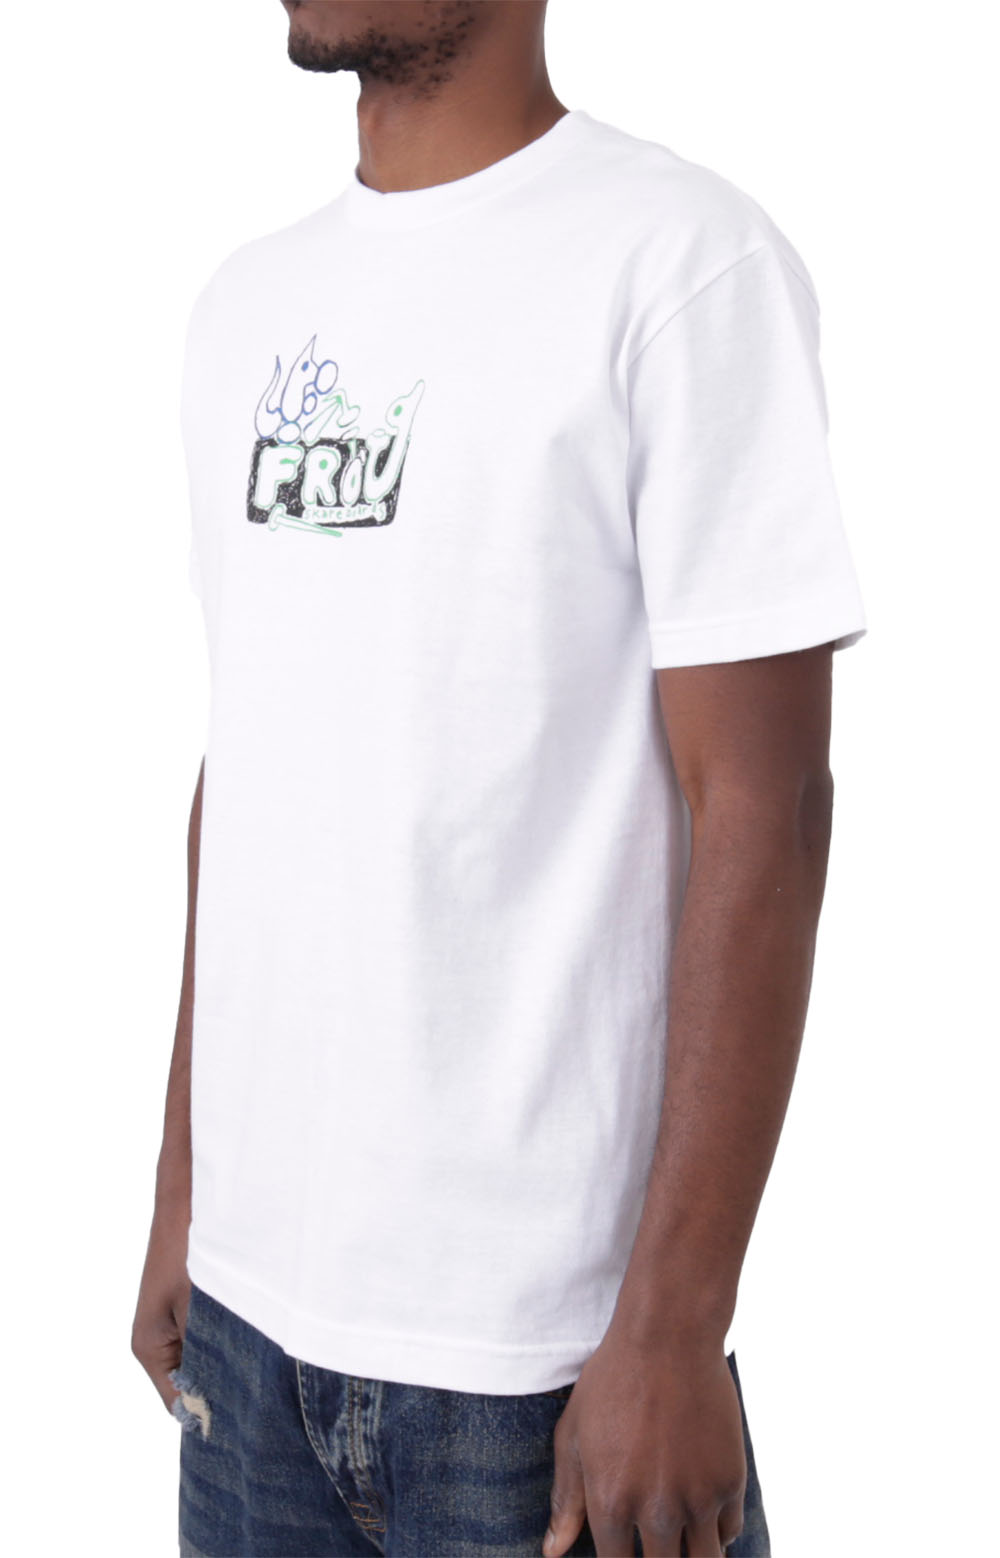 Chipmunk Logo T-Shirt - White